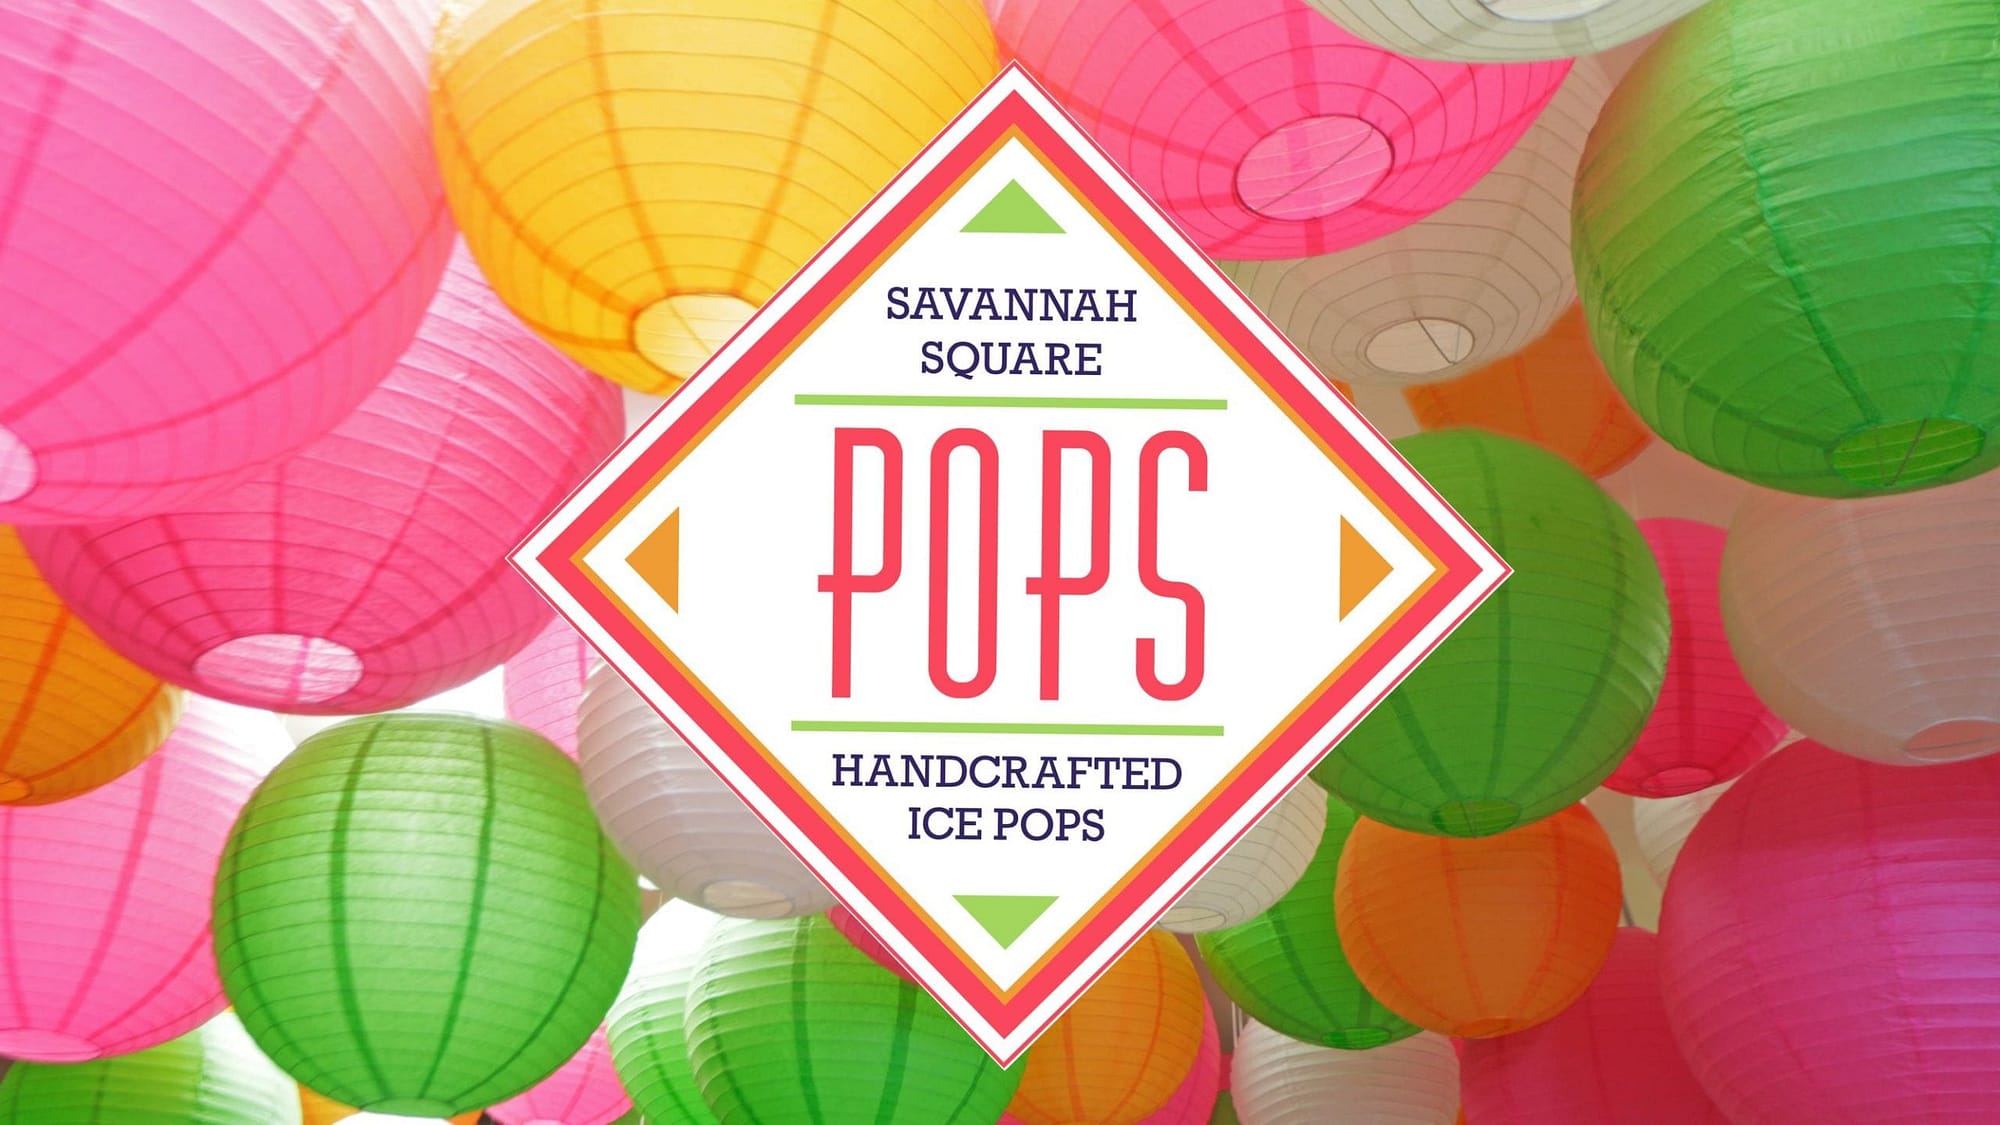 Savannah Square Pops